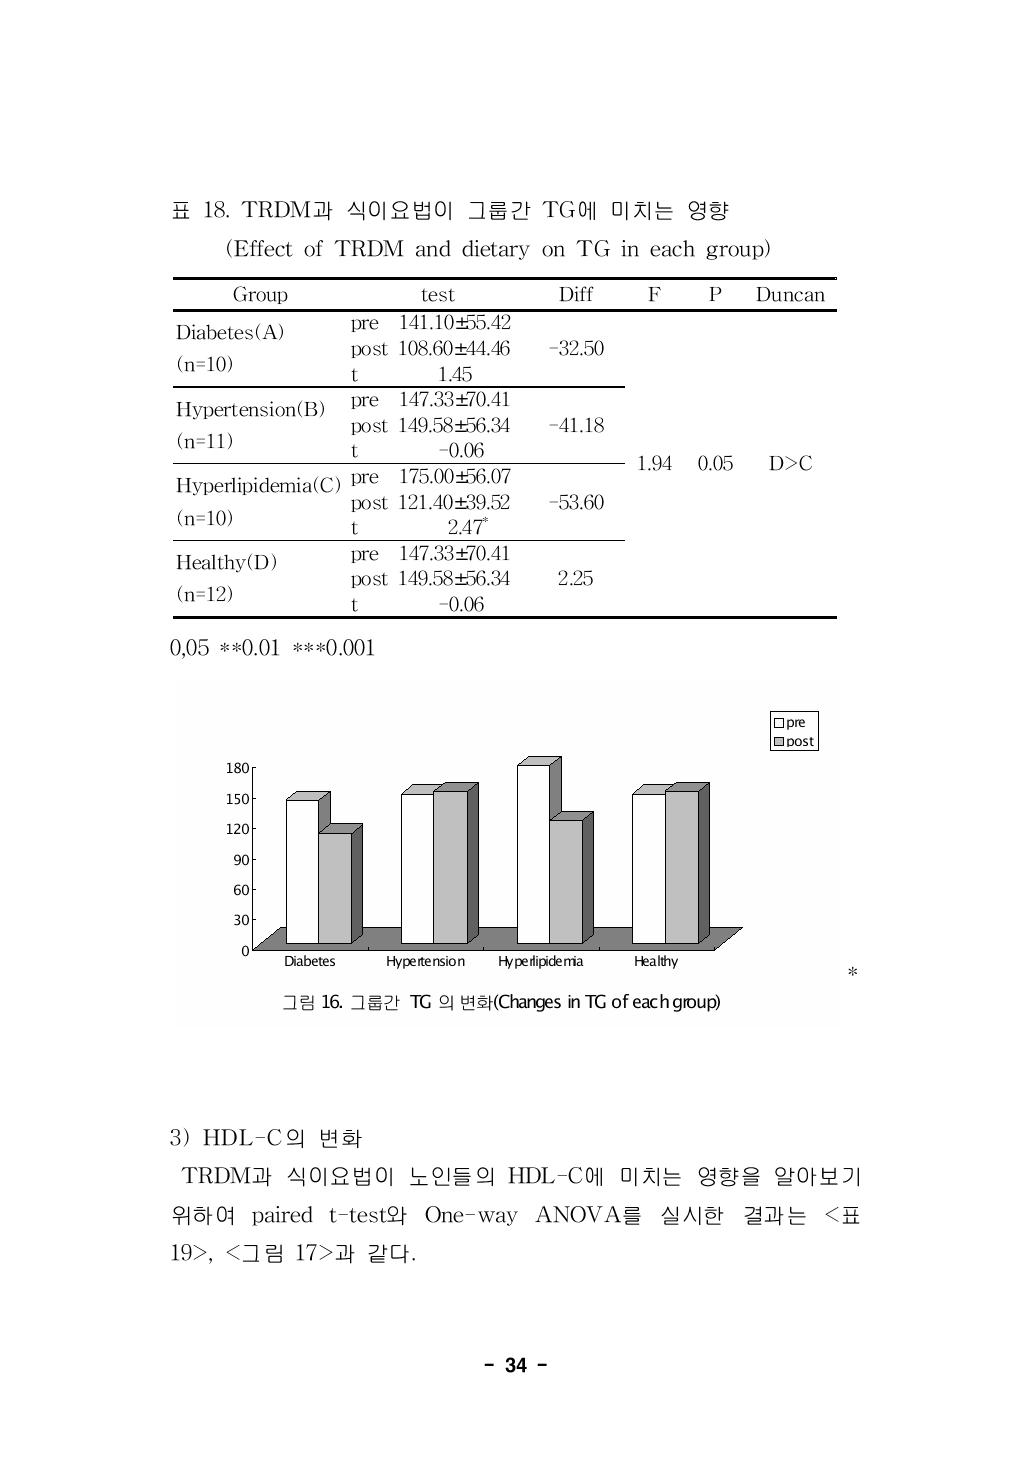 TRDM과 식이요법이 그룹간 TG에 미치는 영향(Effect of TRDM and dietary on TG in each group)